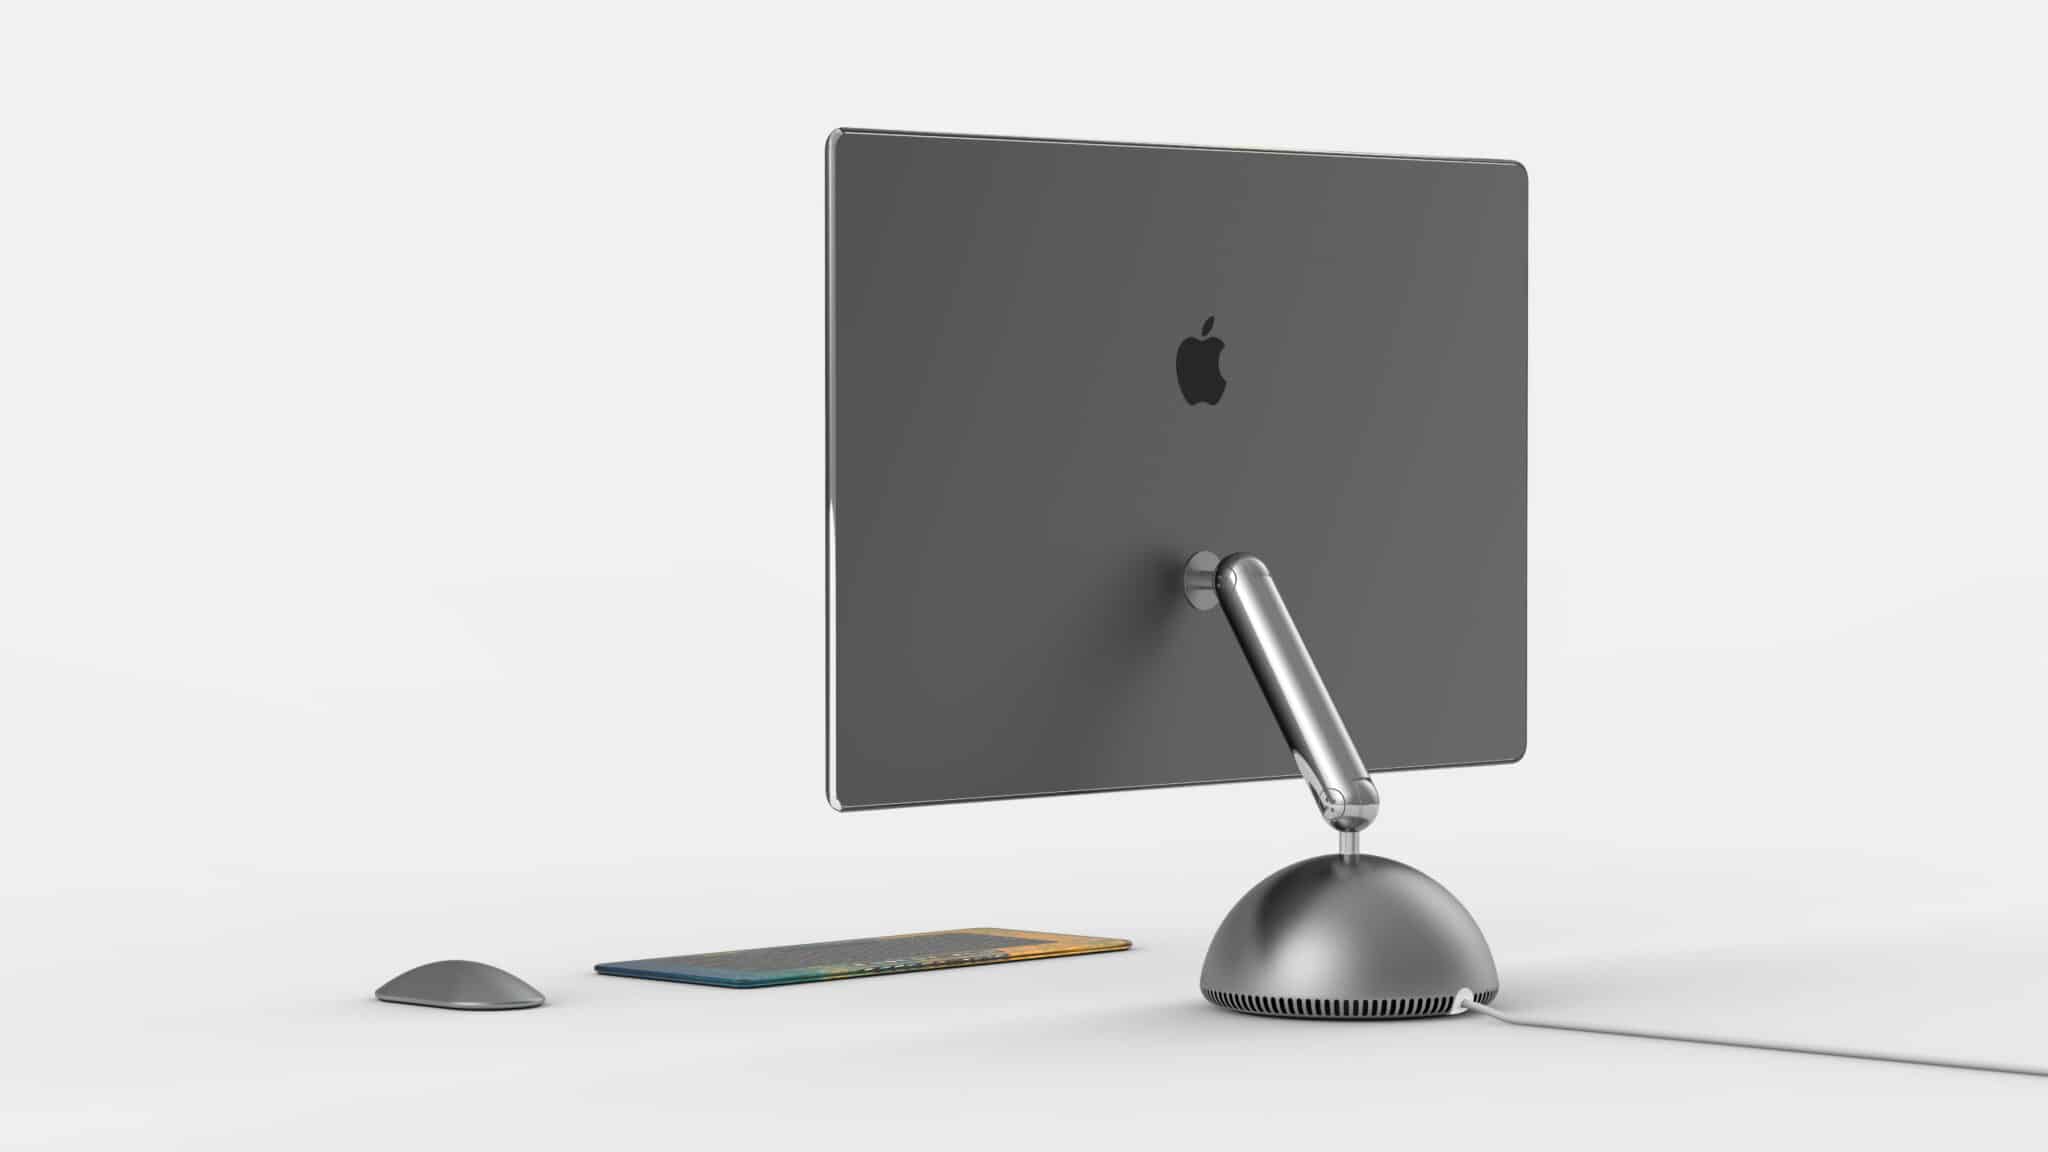 Apple iMac G4 Concept 2020